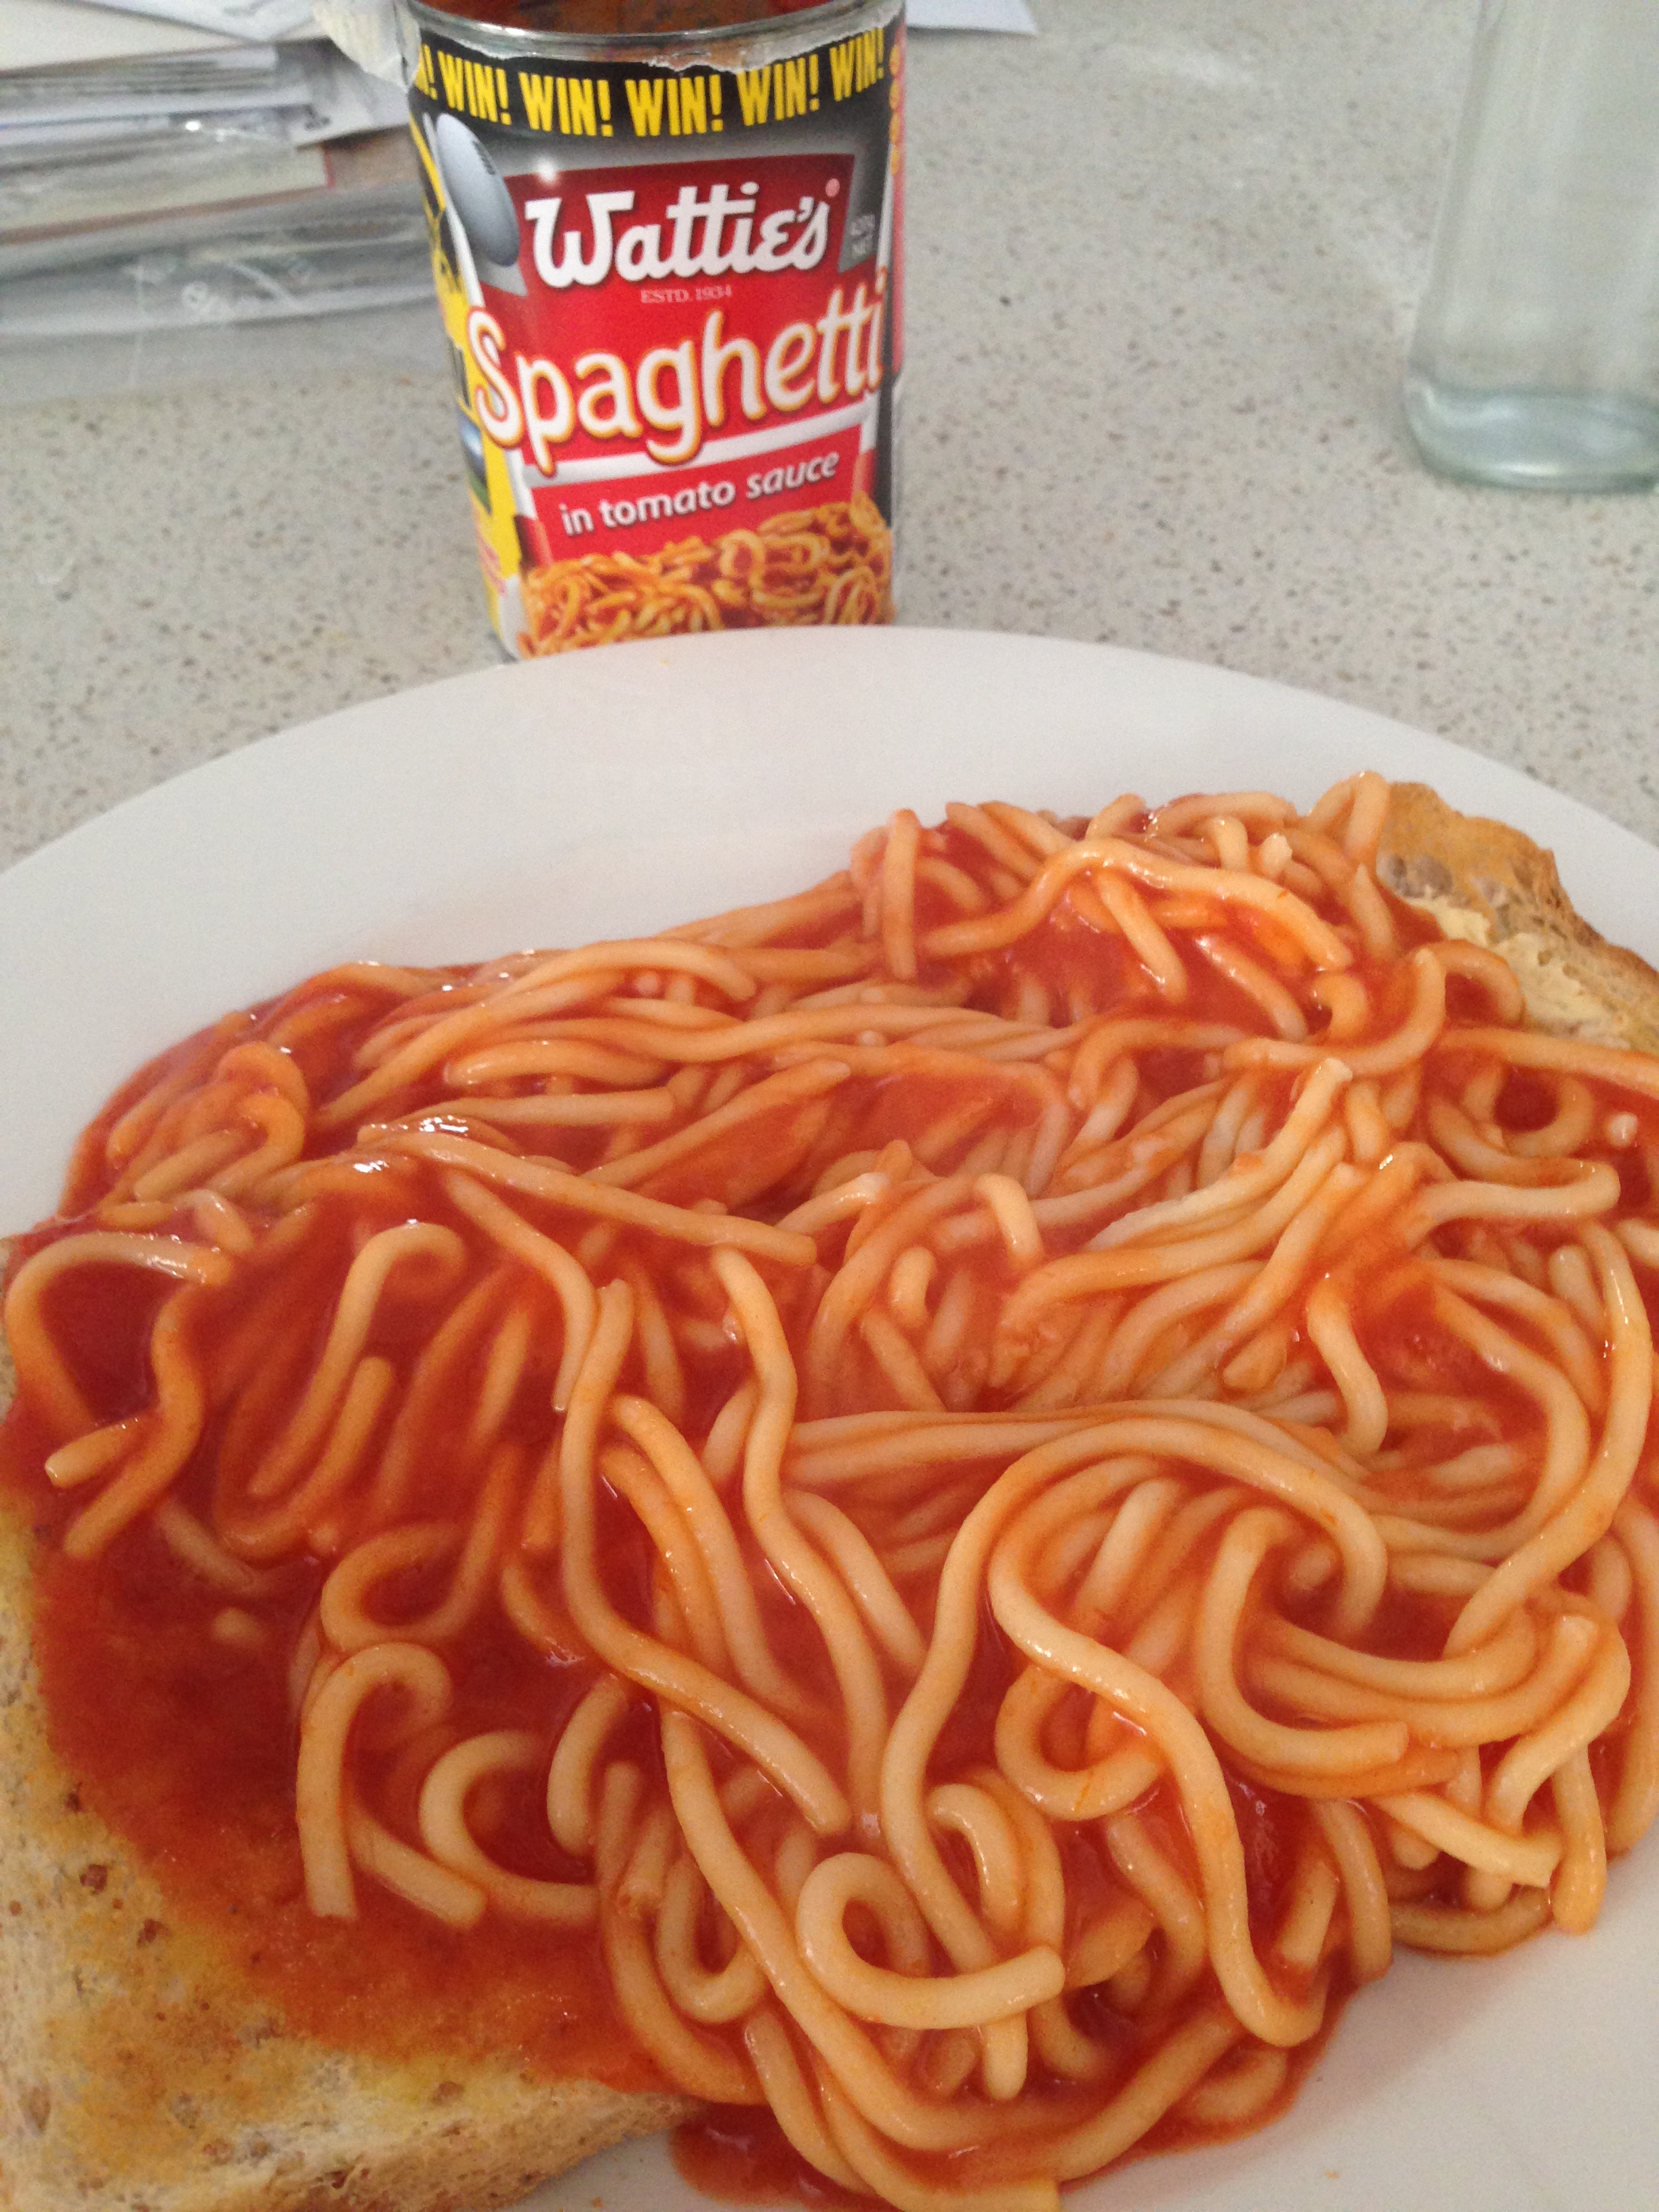 Image result for watties spaghetti